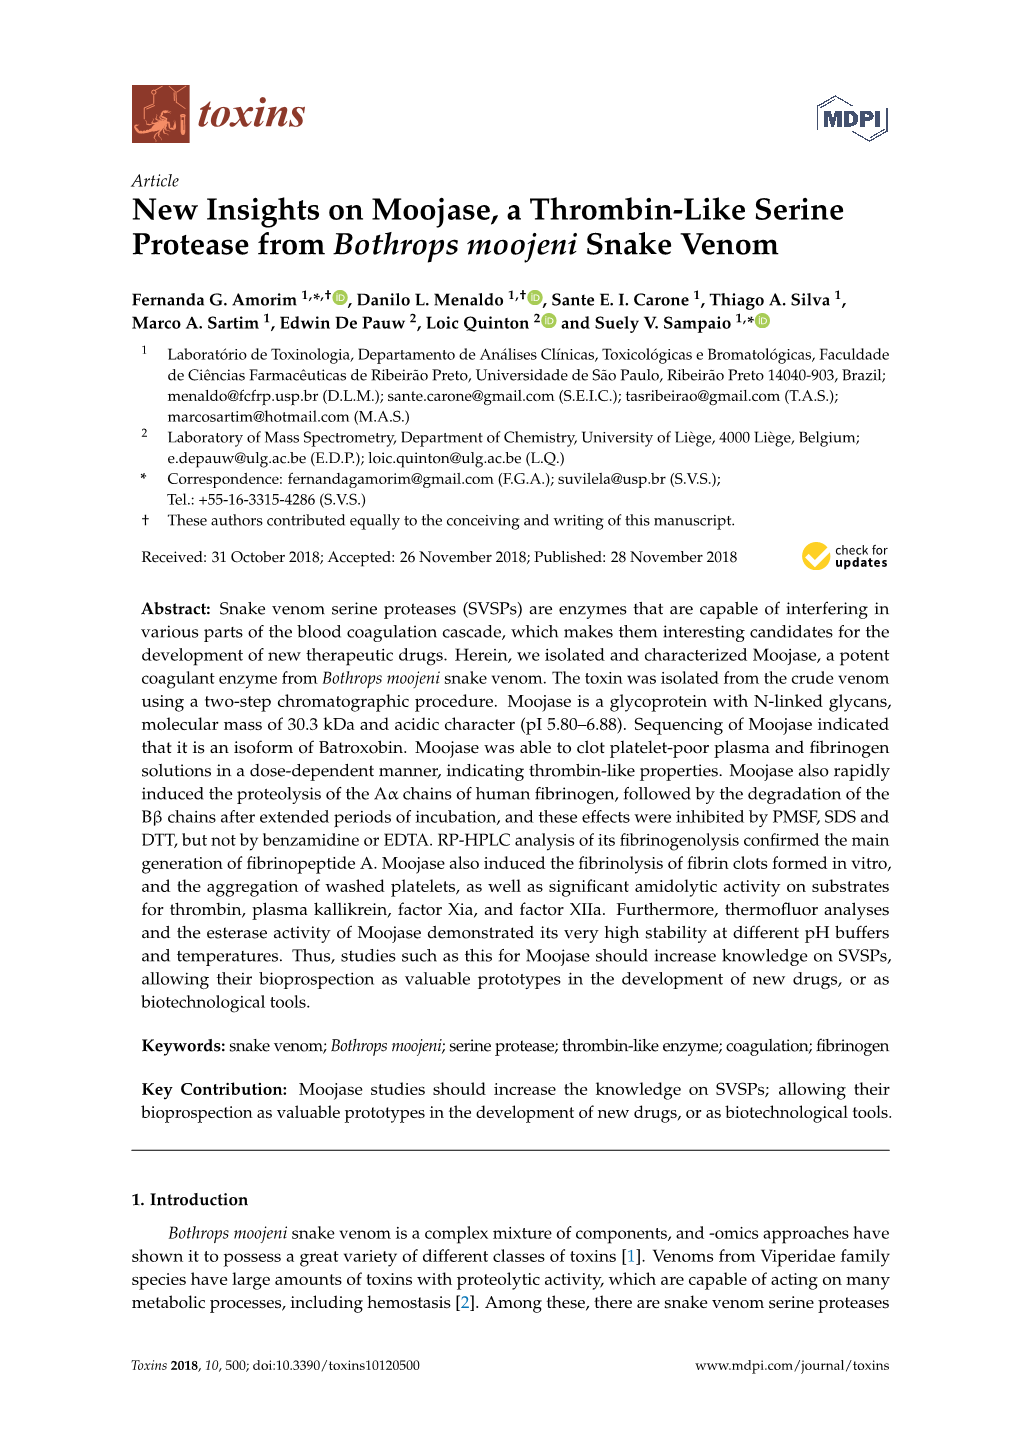 New Insights on Moojase, a Thrombin-Like Serine Protease from Bothrops Moojeni Snake Venom